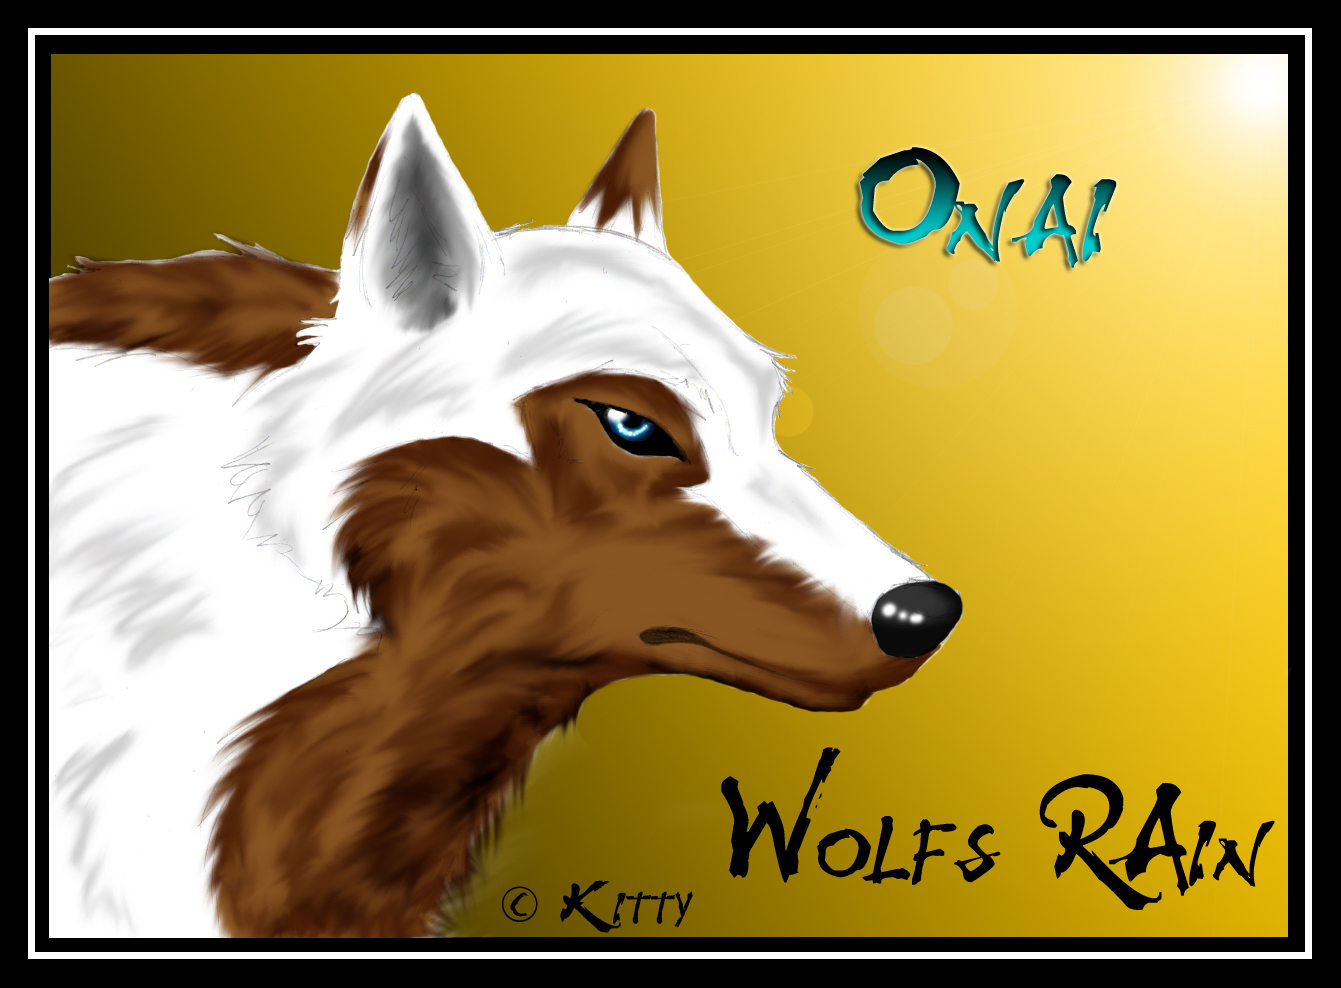 Onai Wolf's Rain by sword_dragon